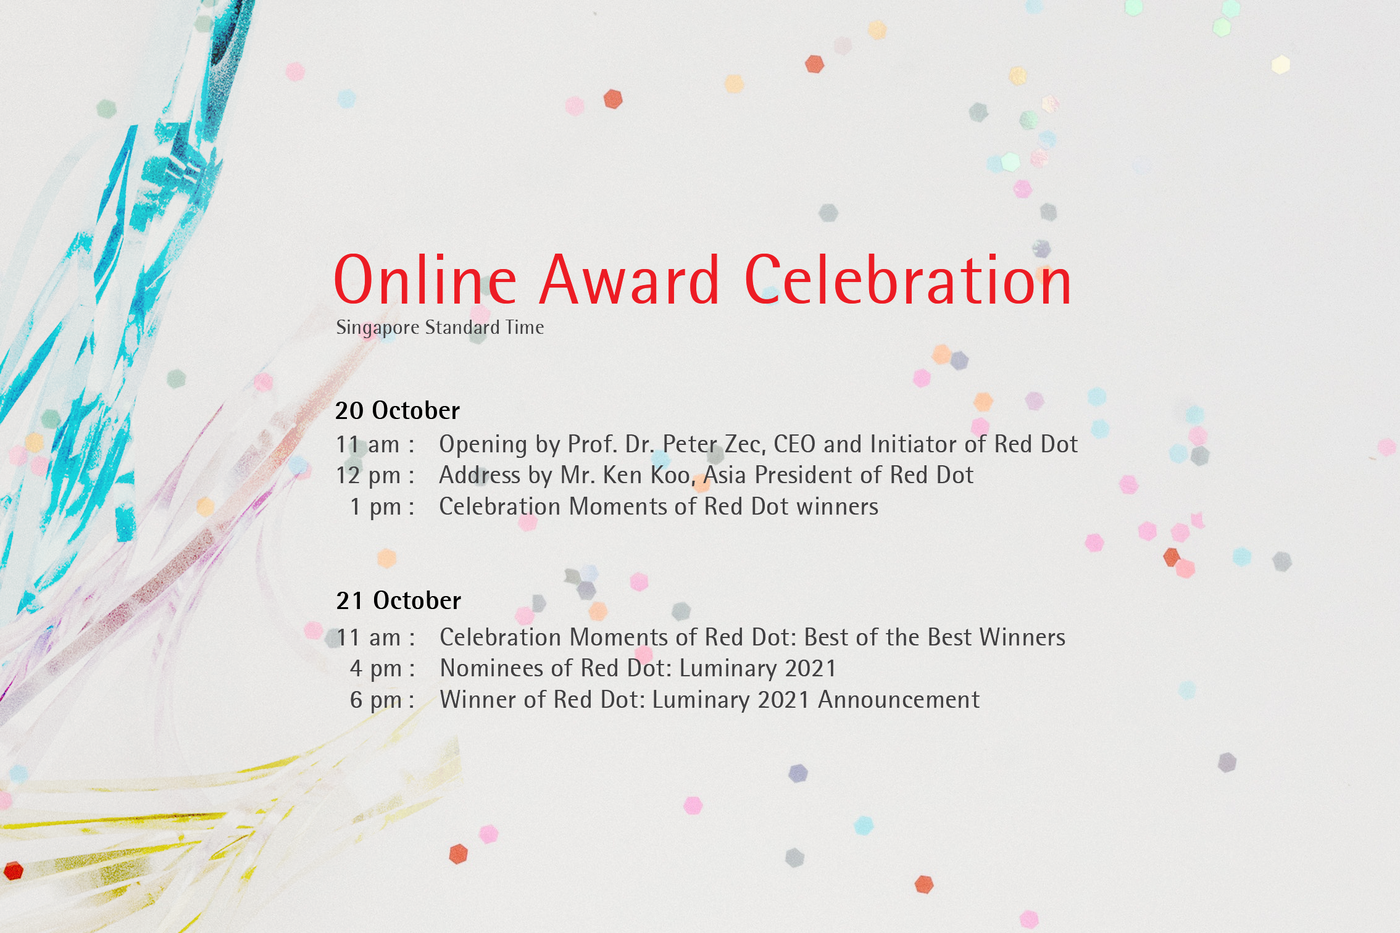 Award Celebration on 20 and 21 October 2021